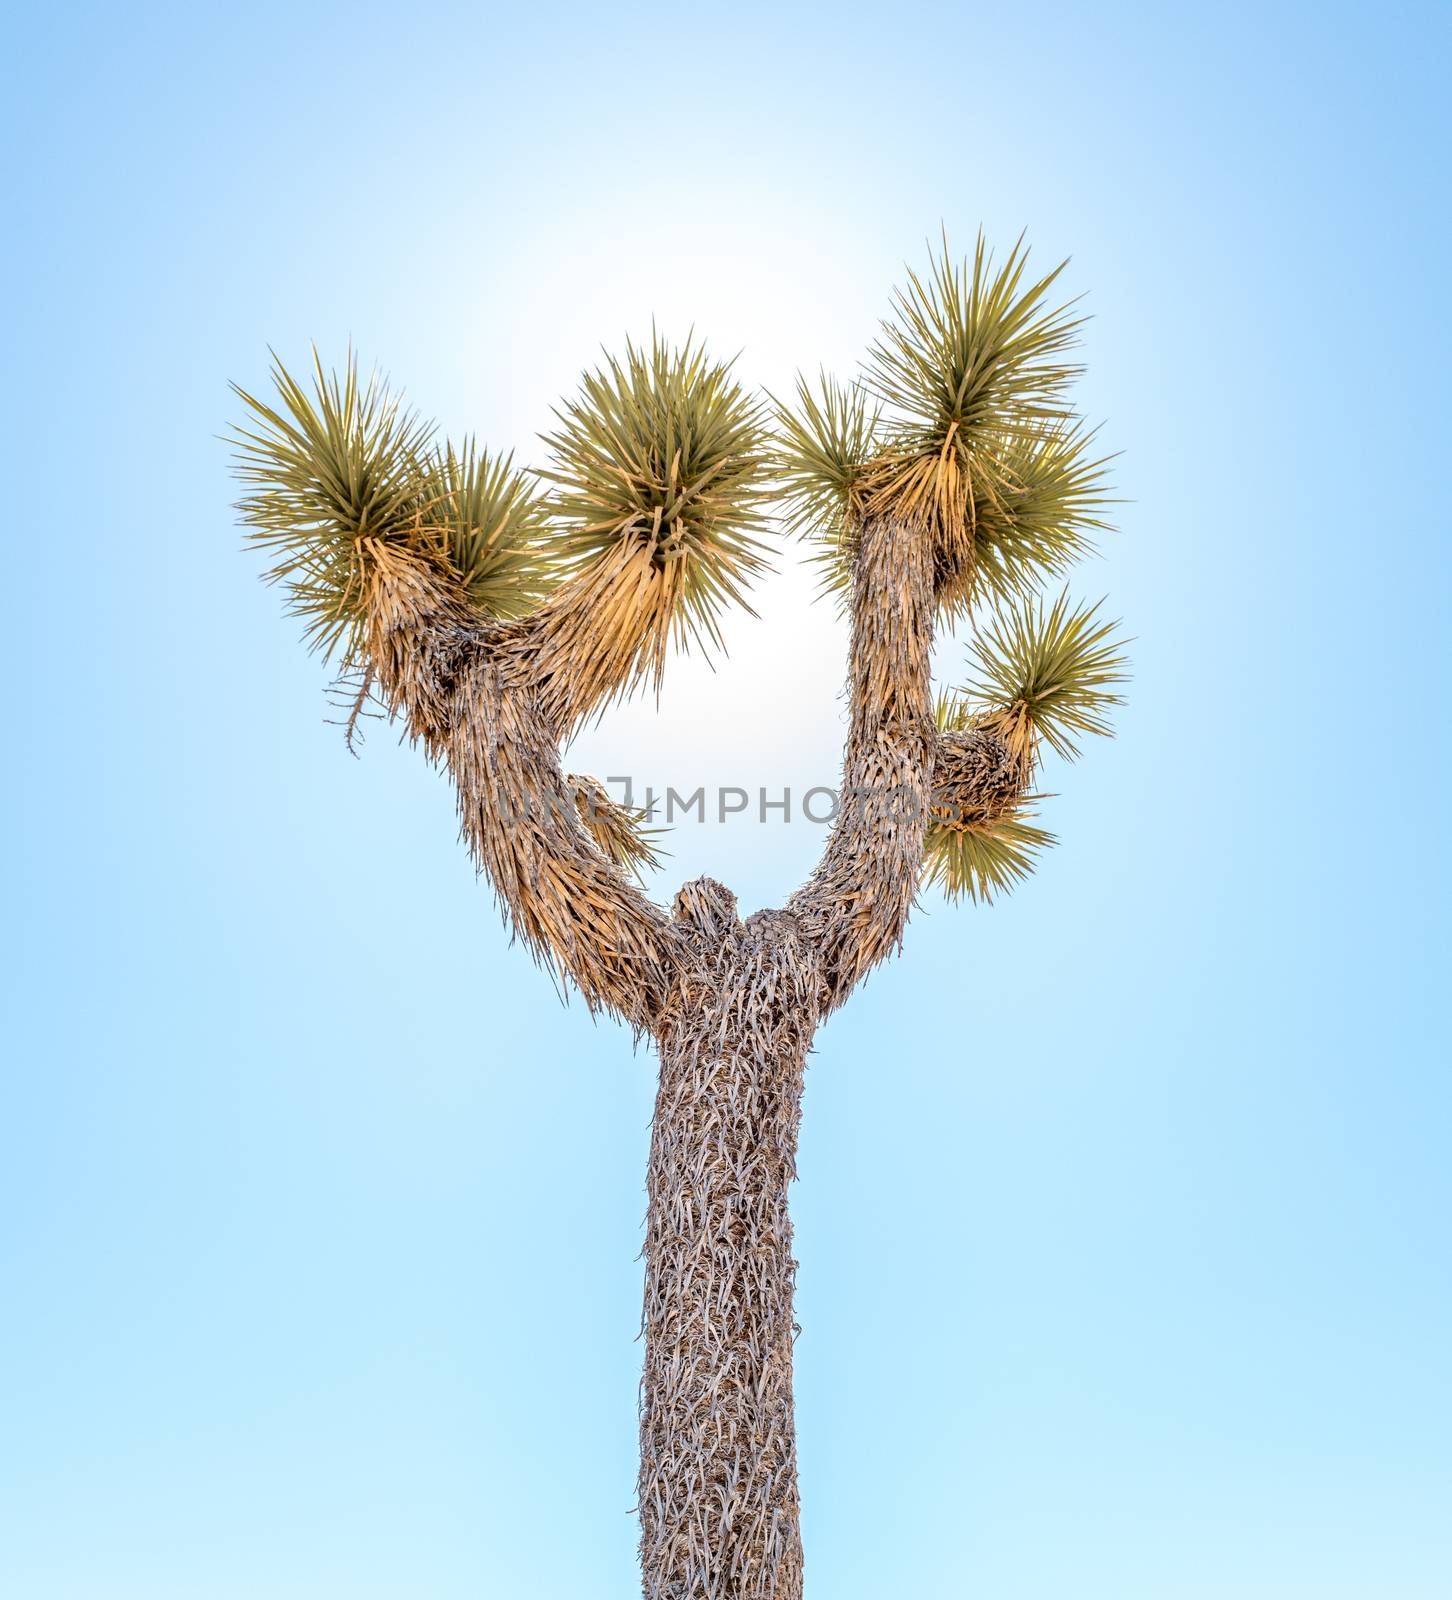 Joshua tree (Yucca brevifolia) in Joshua Tree National Park, California